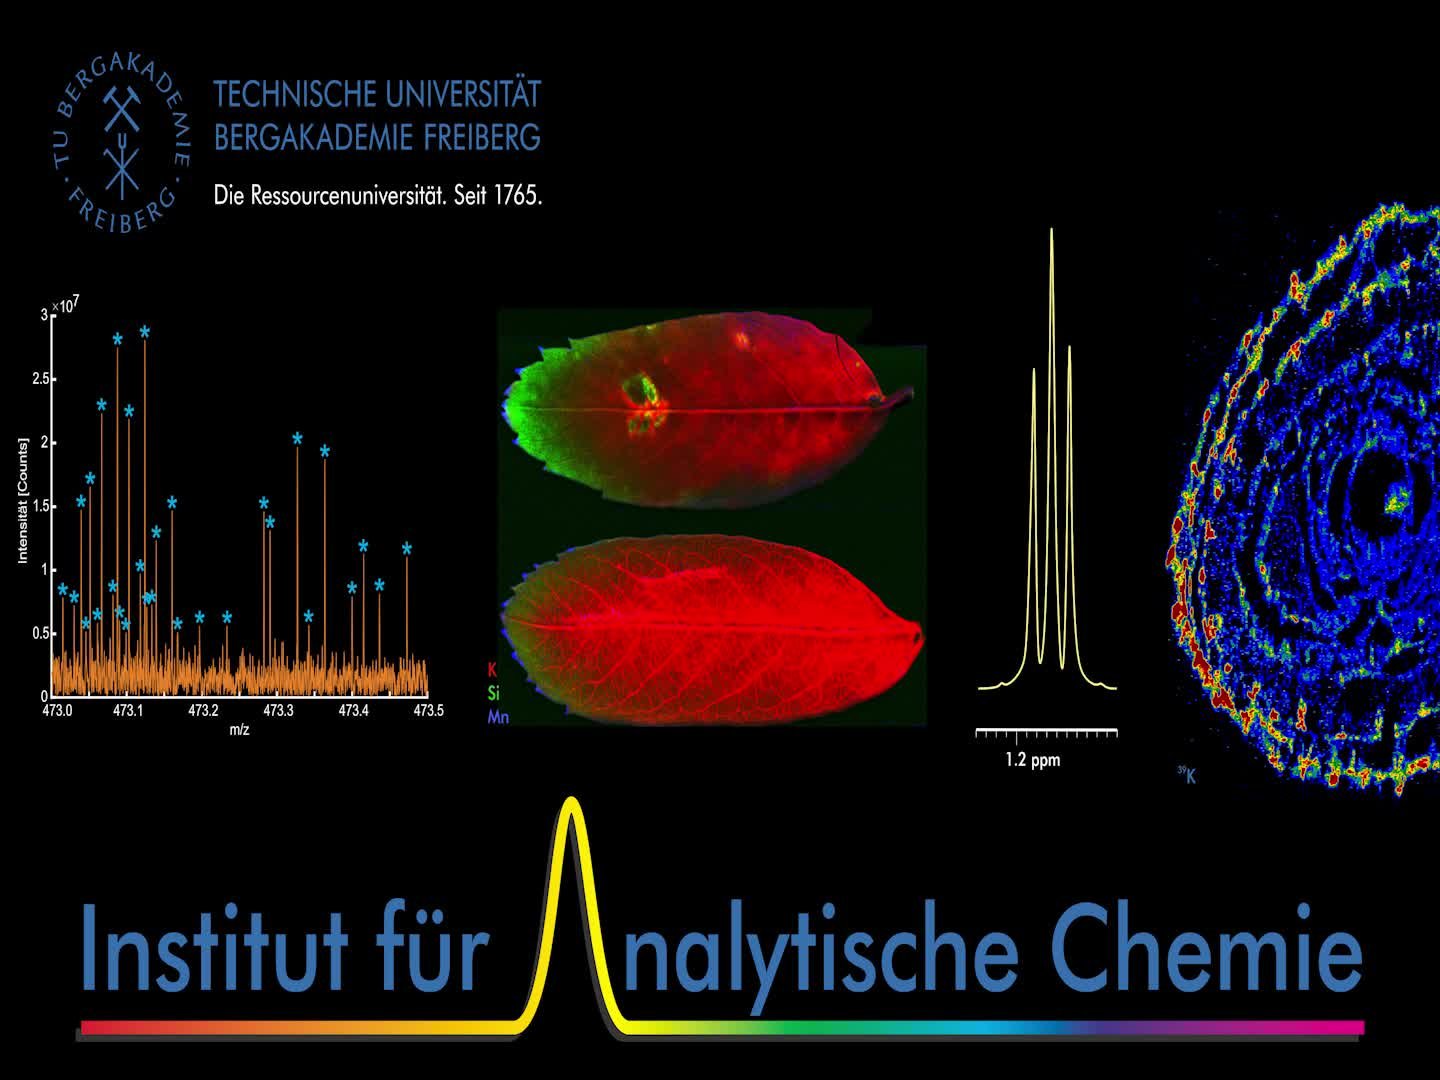 Imagefilm Analytische Chemie